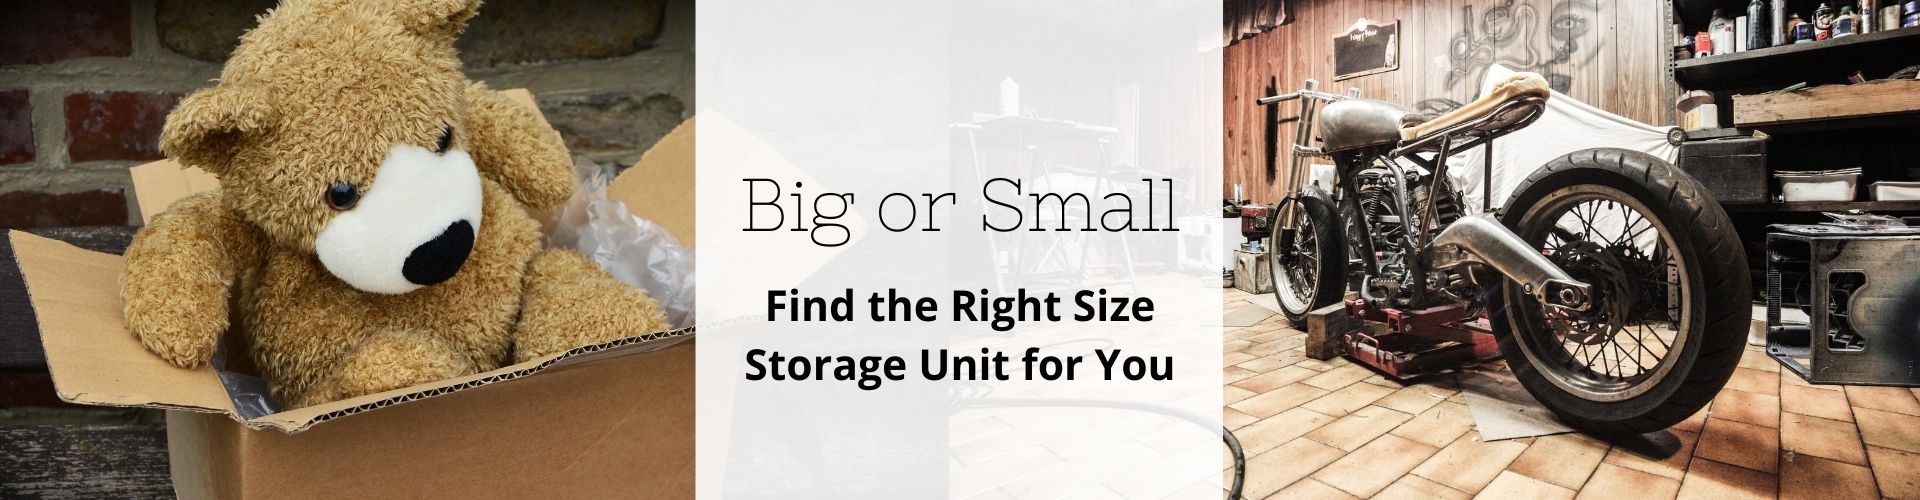 storage unit size guide